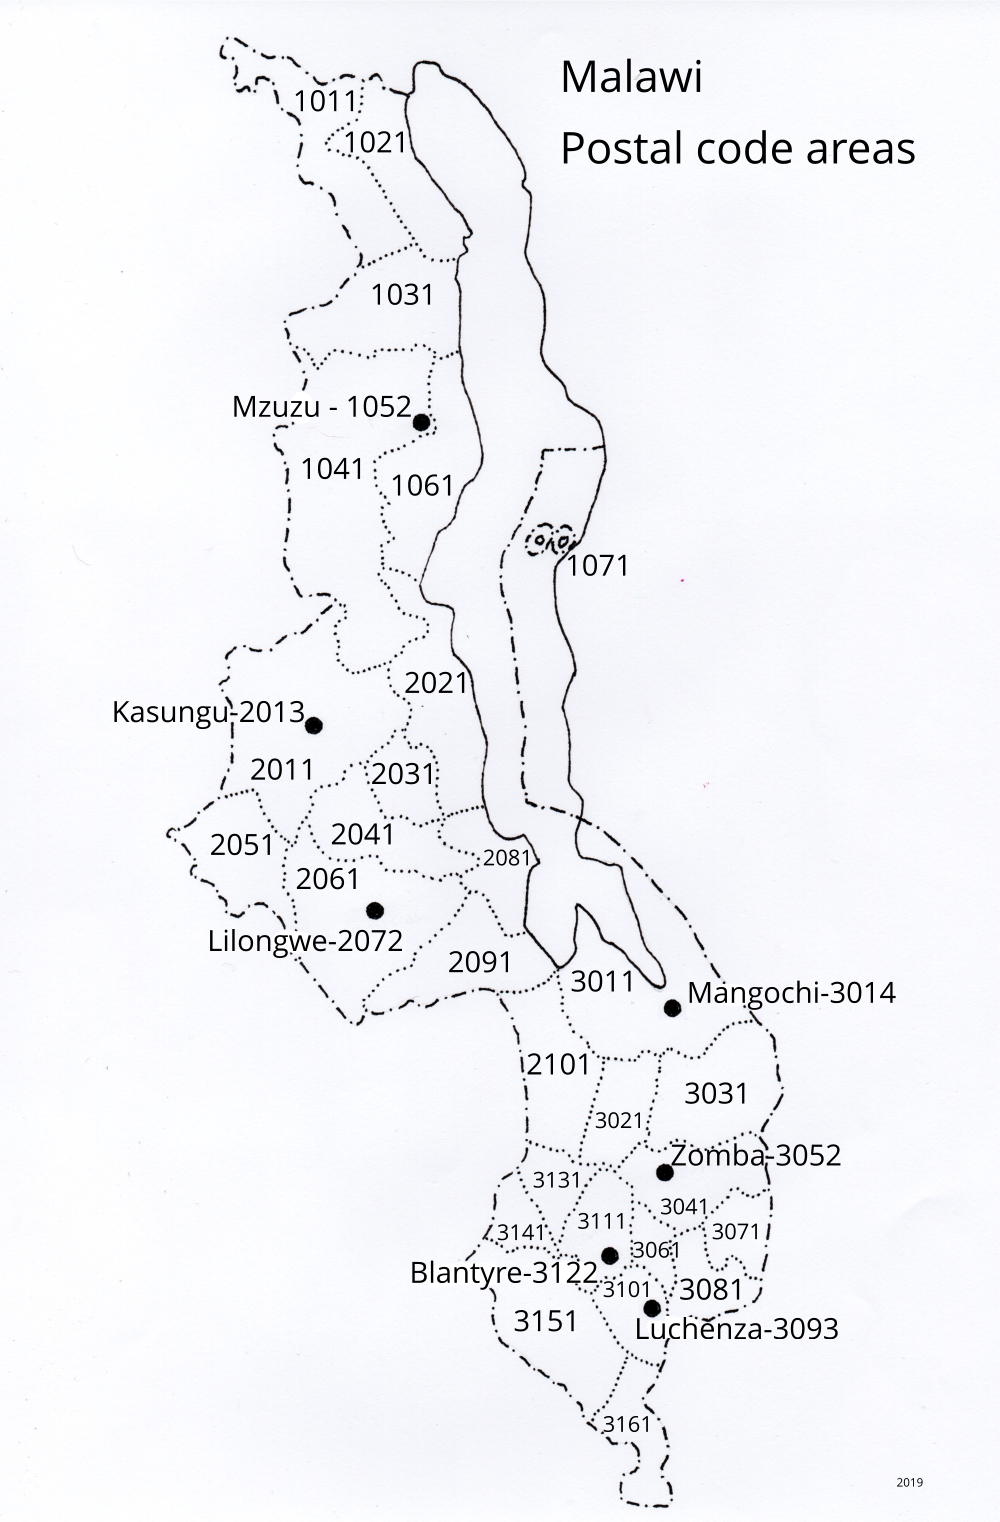 Malawi postal code areas 2019